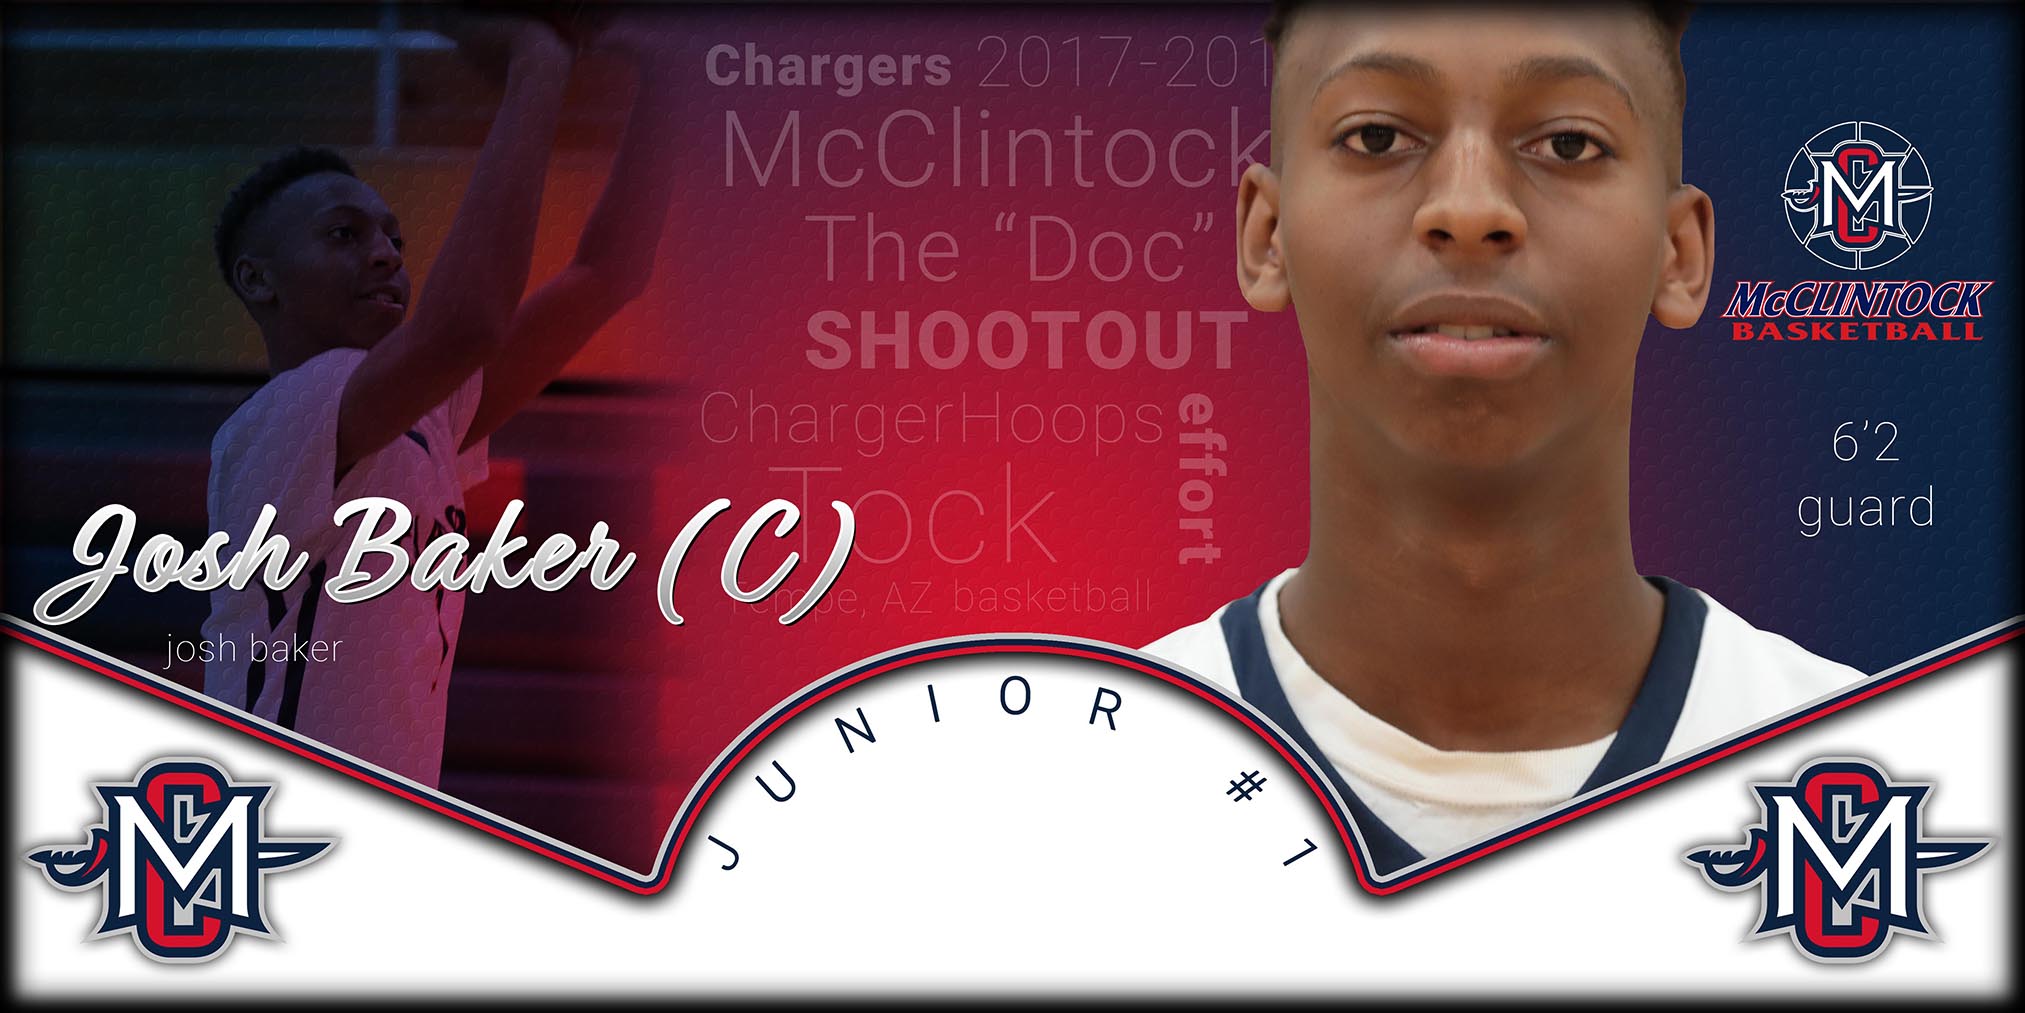 McClintock Chargers Basketball- Josh Baker